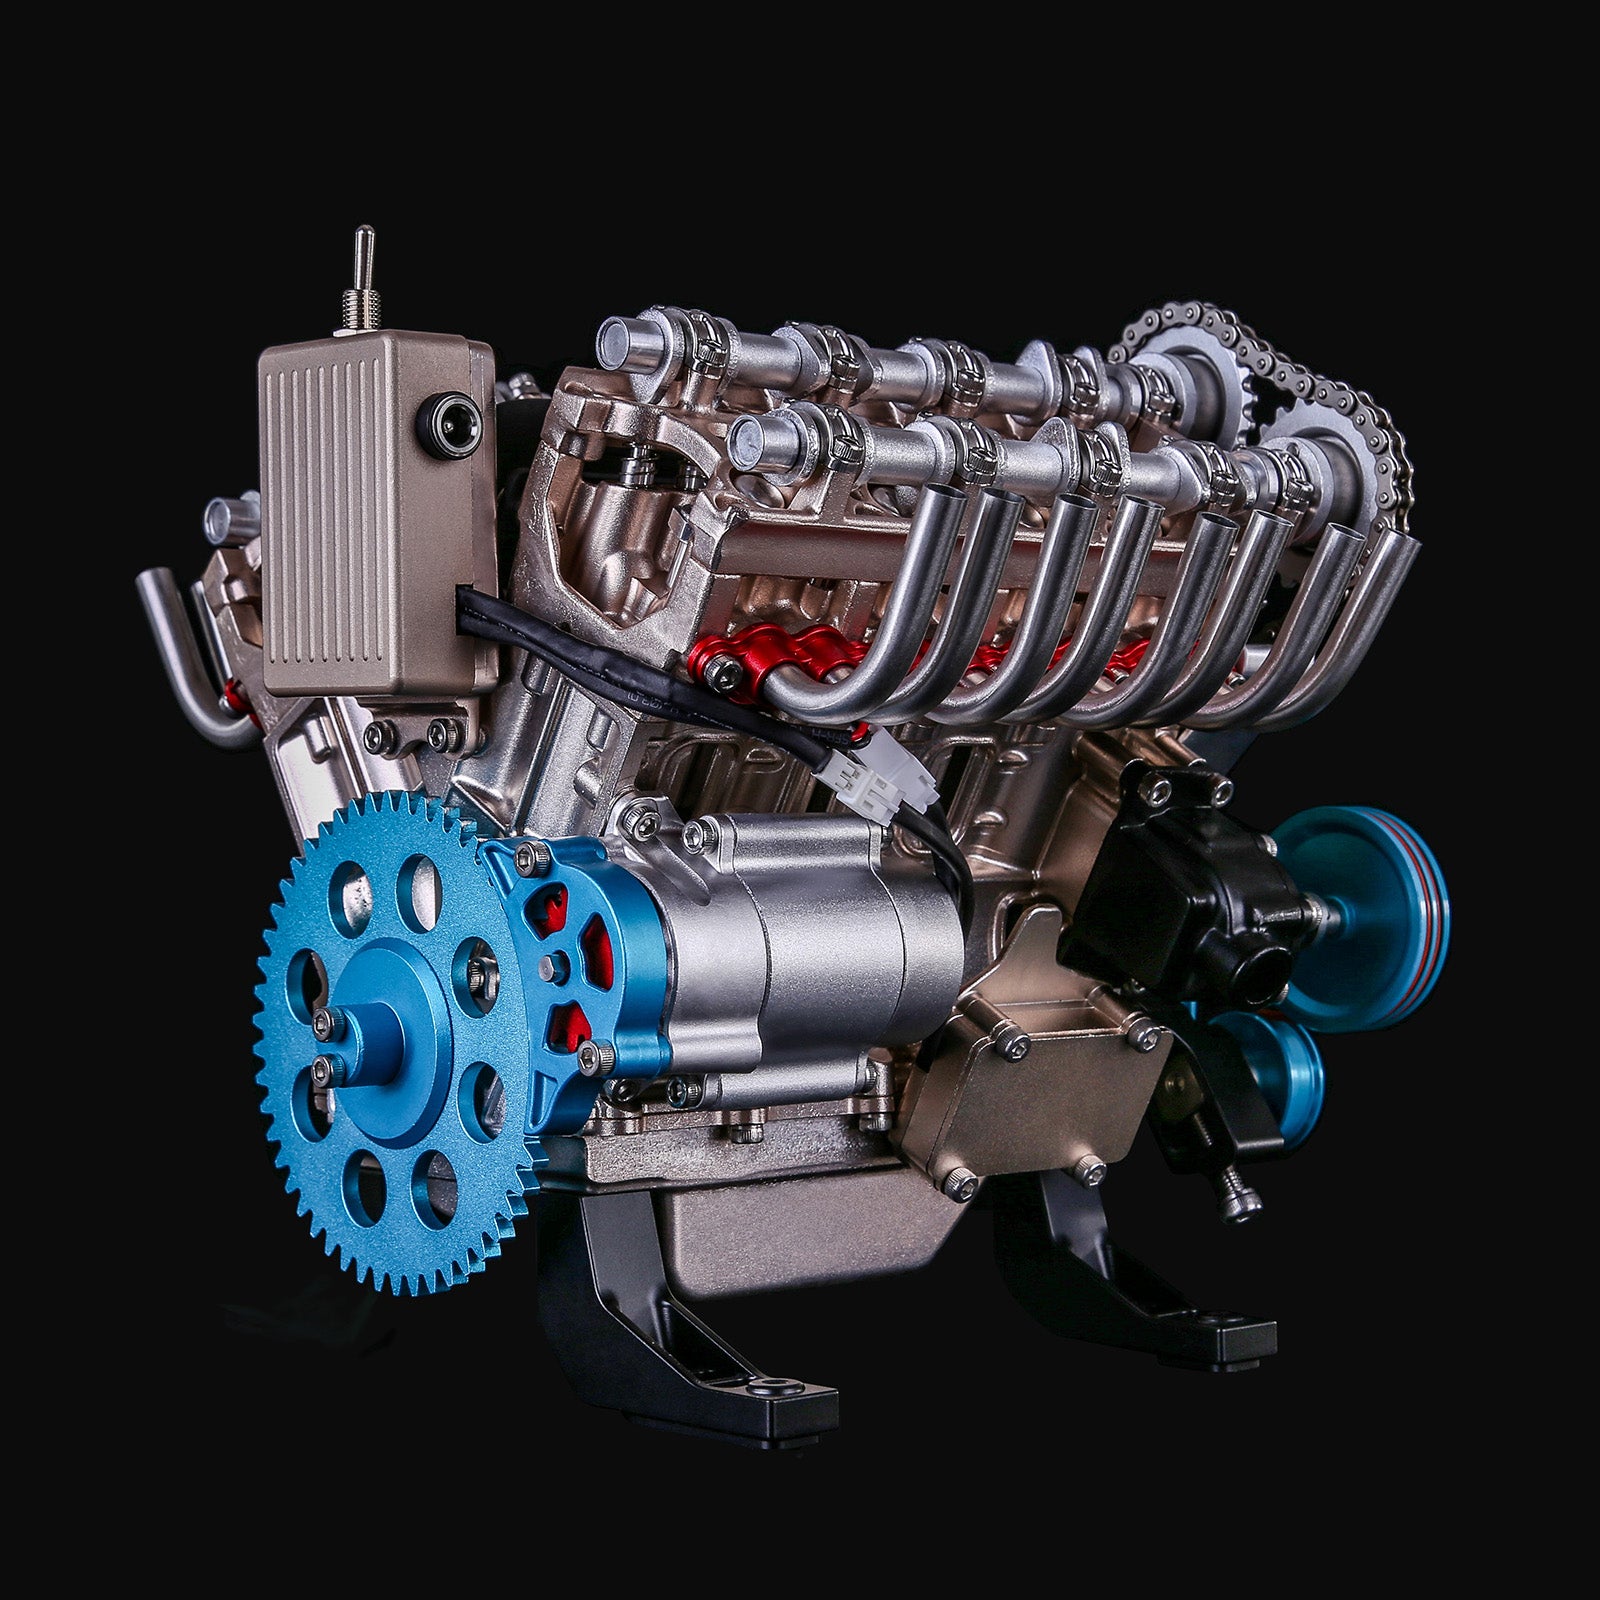 Teching V8 Engine Model Kit Metal Assembly DIY Kit 500+Pcs Mechanical Car Engine Science Experiment Physics Toy